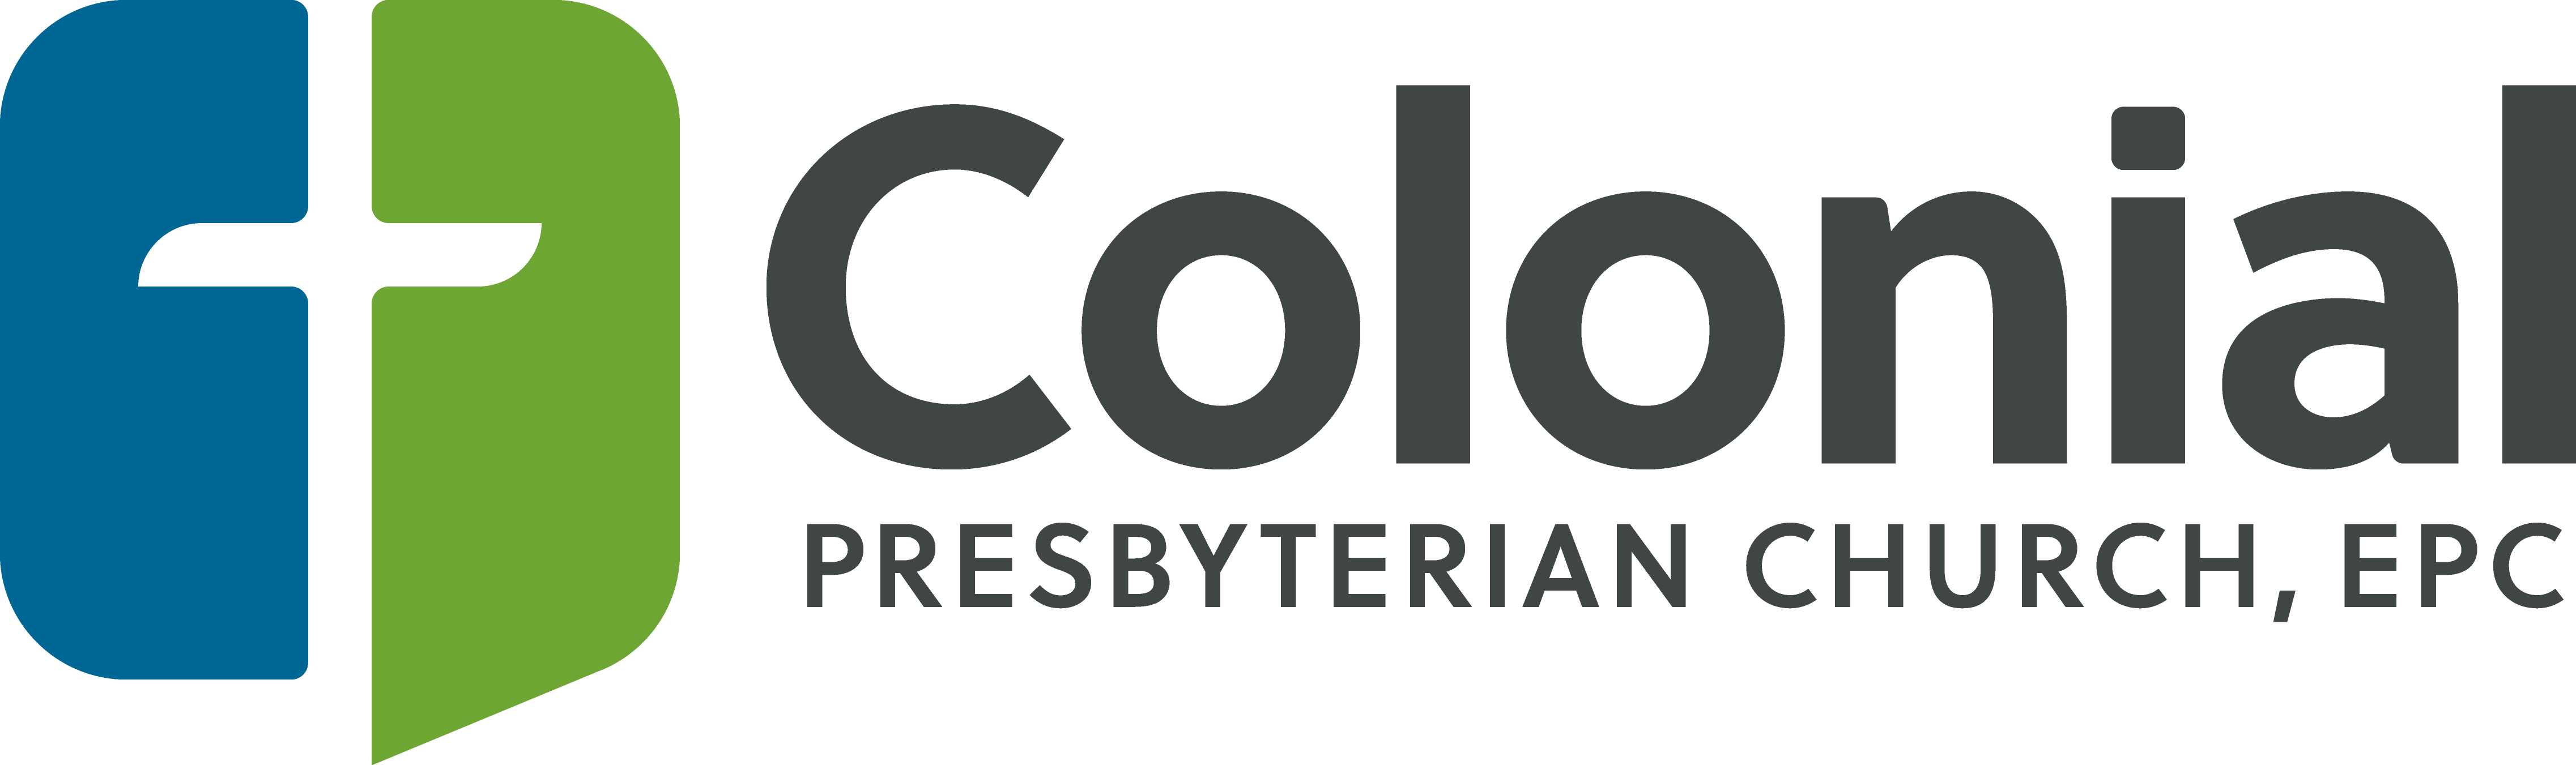 Colonial Logo - colonial presbyterian church logo wide color RGB • Colonial